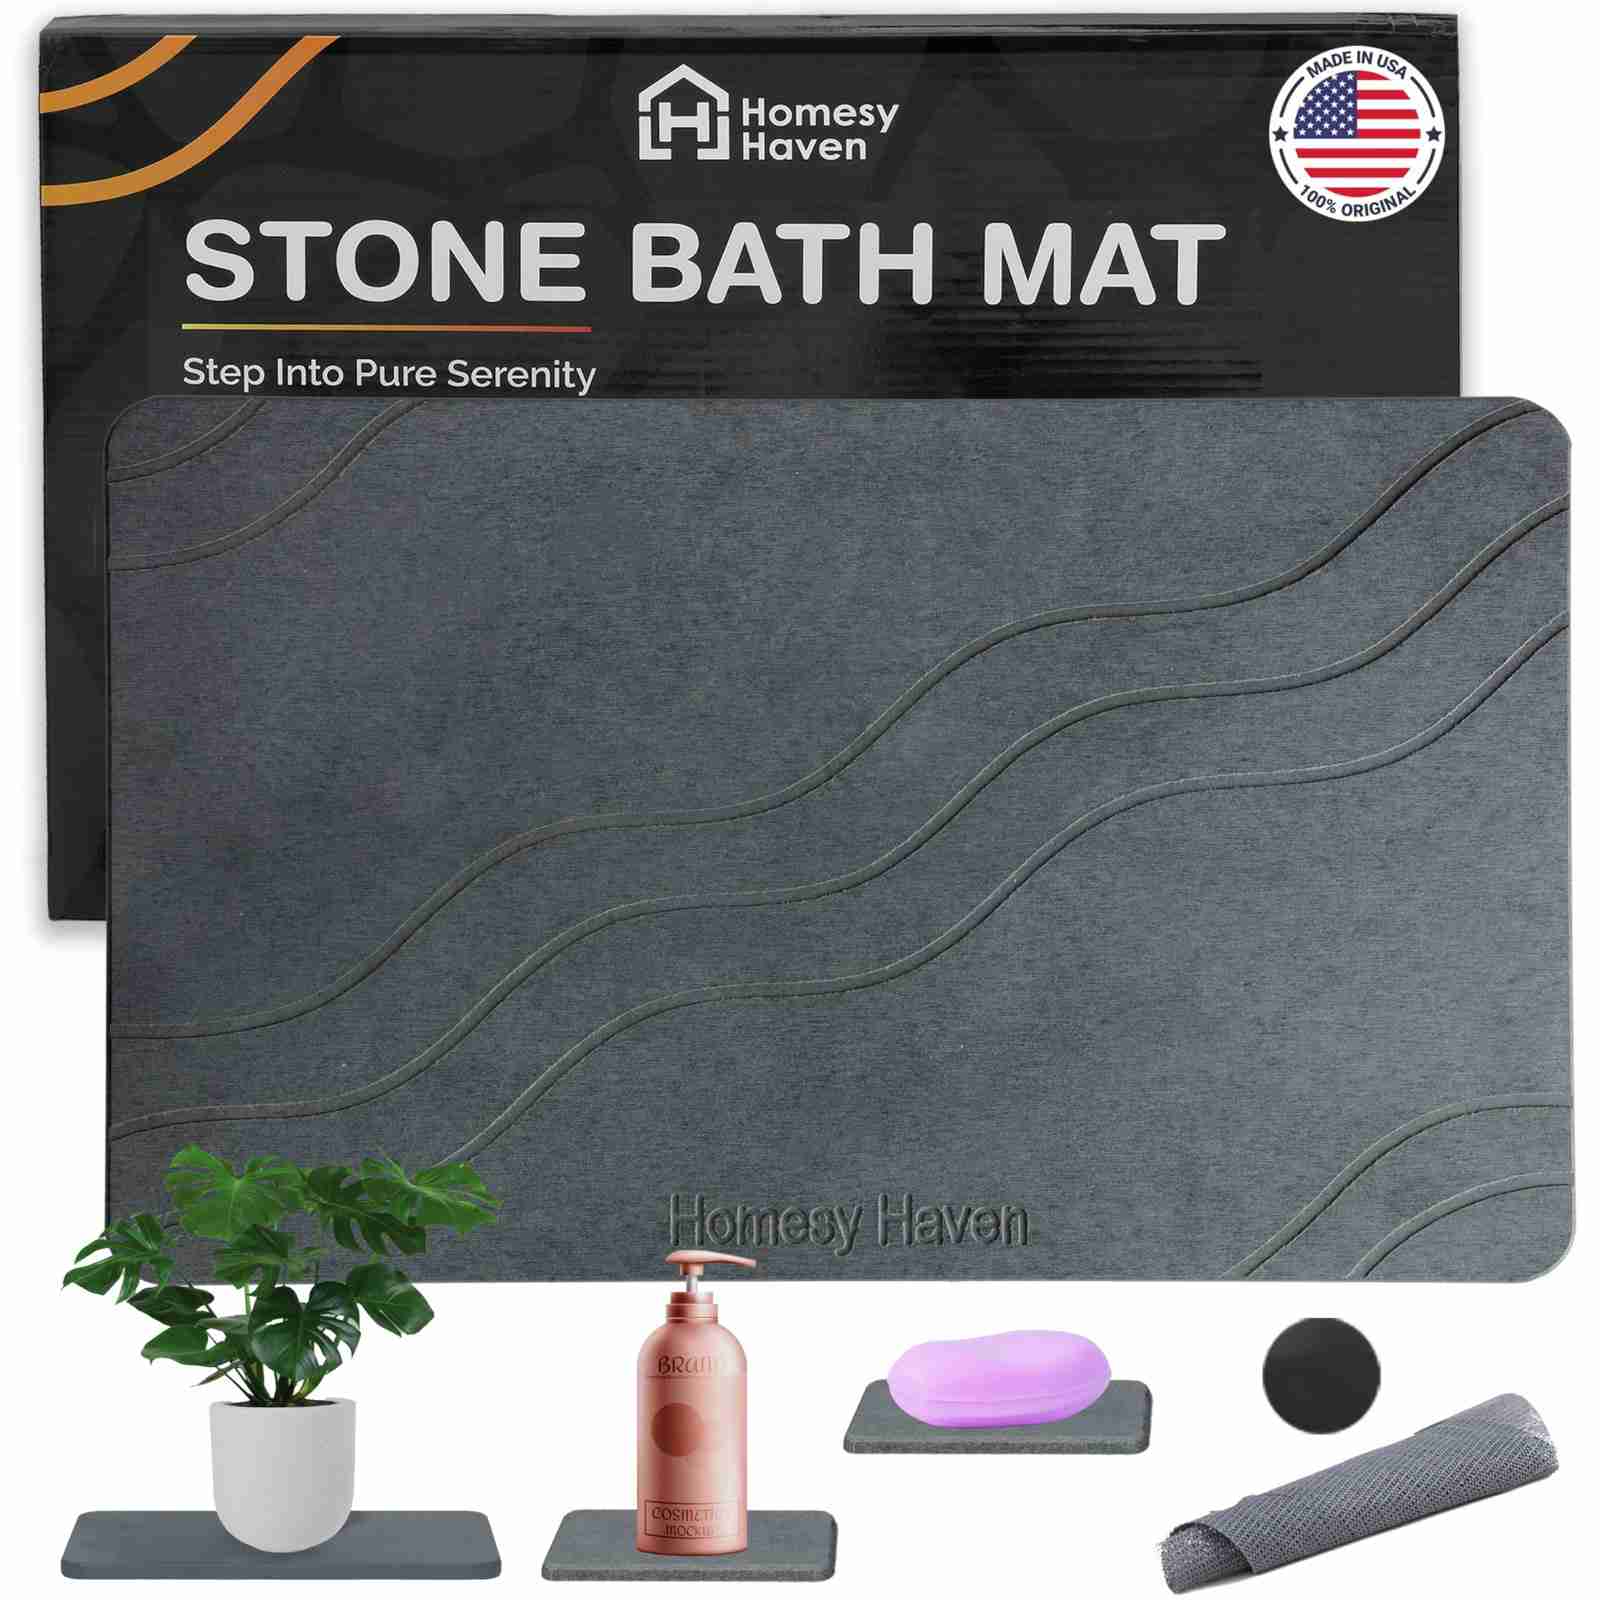 stone-bath-mat with cash back rebate